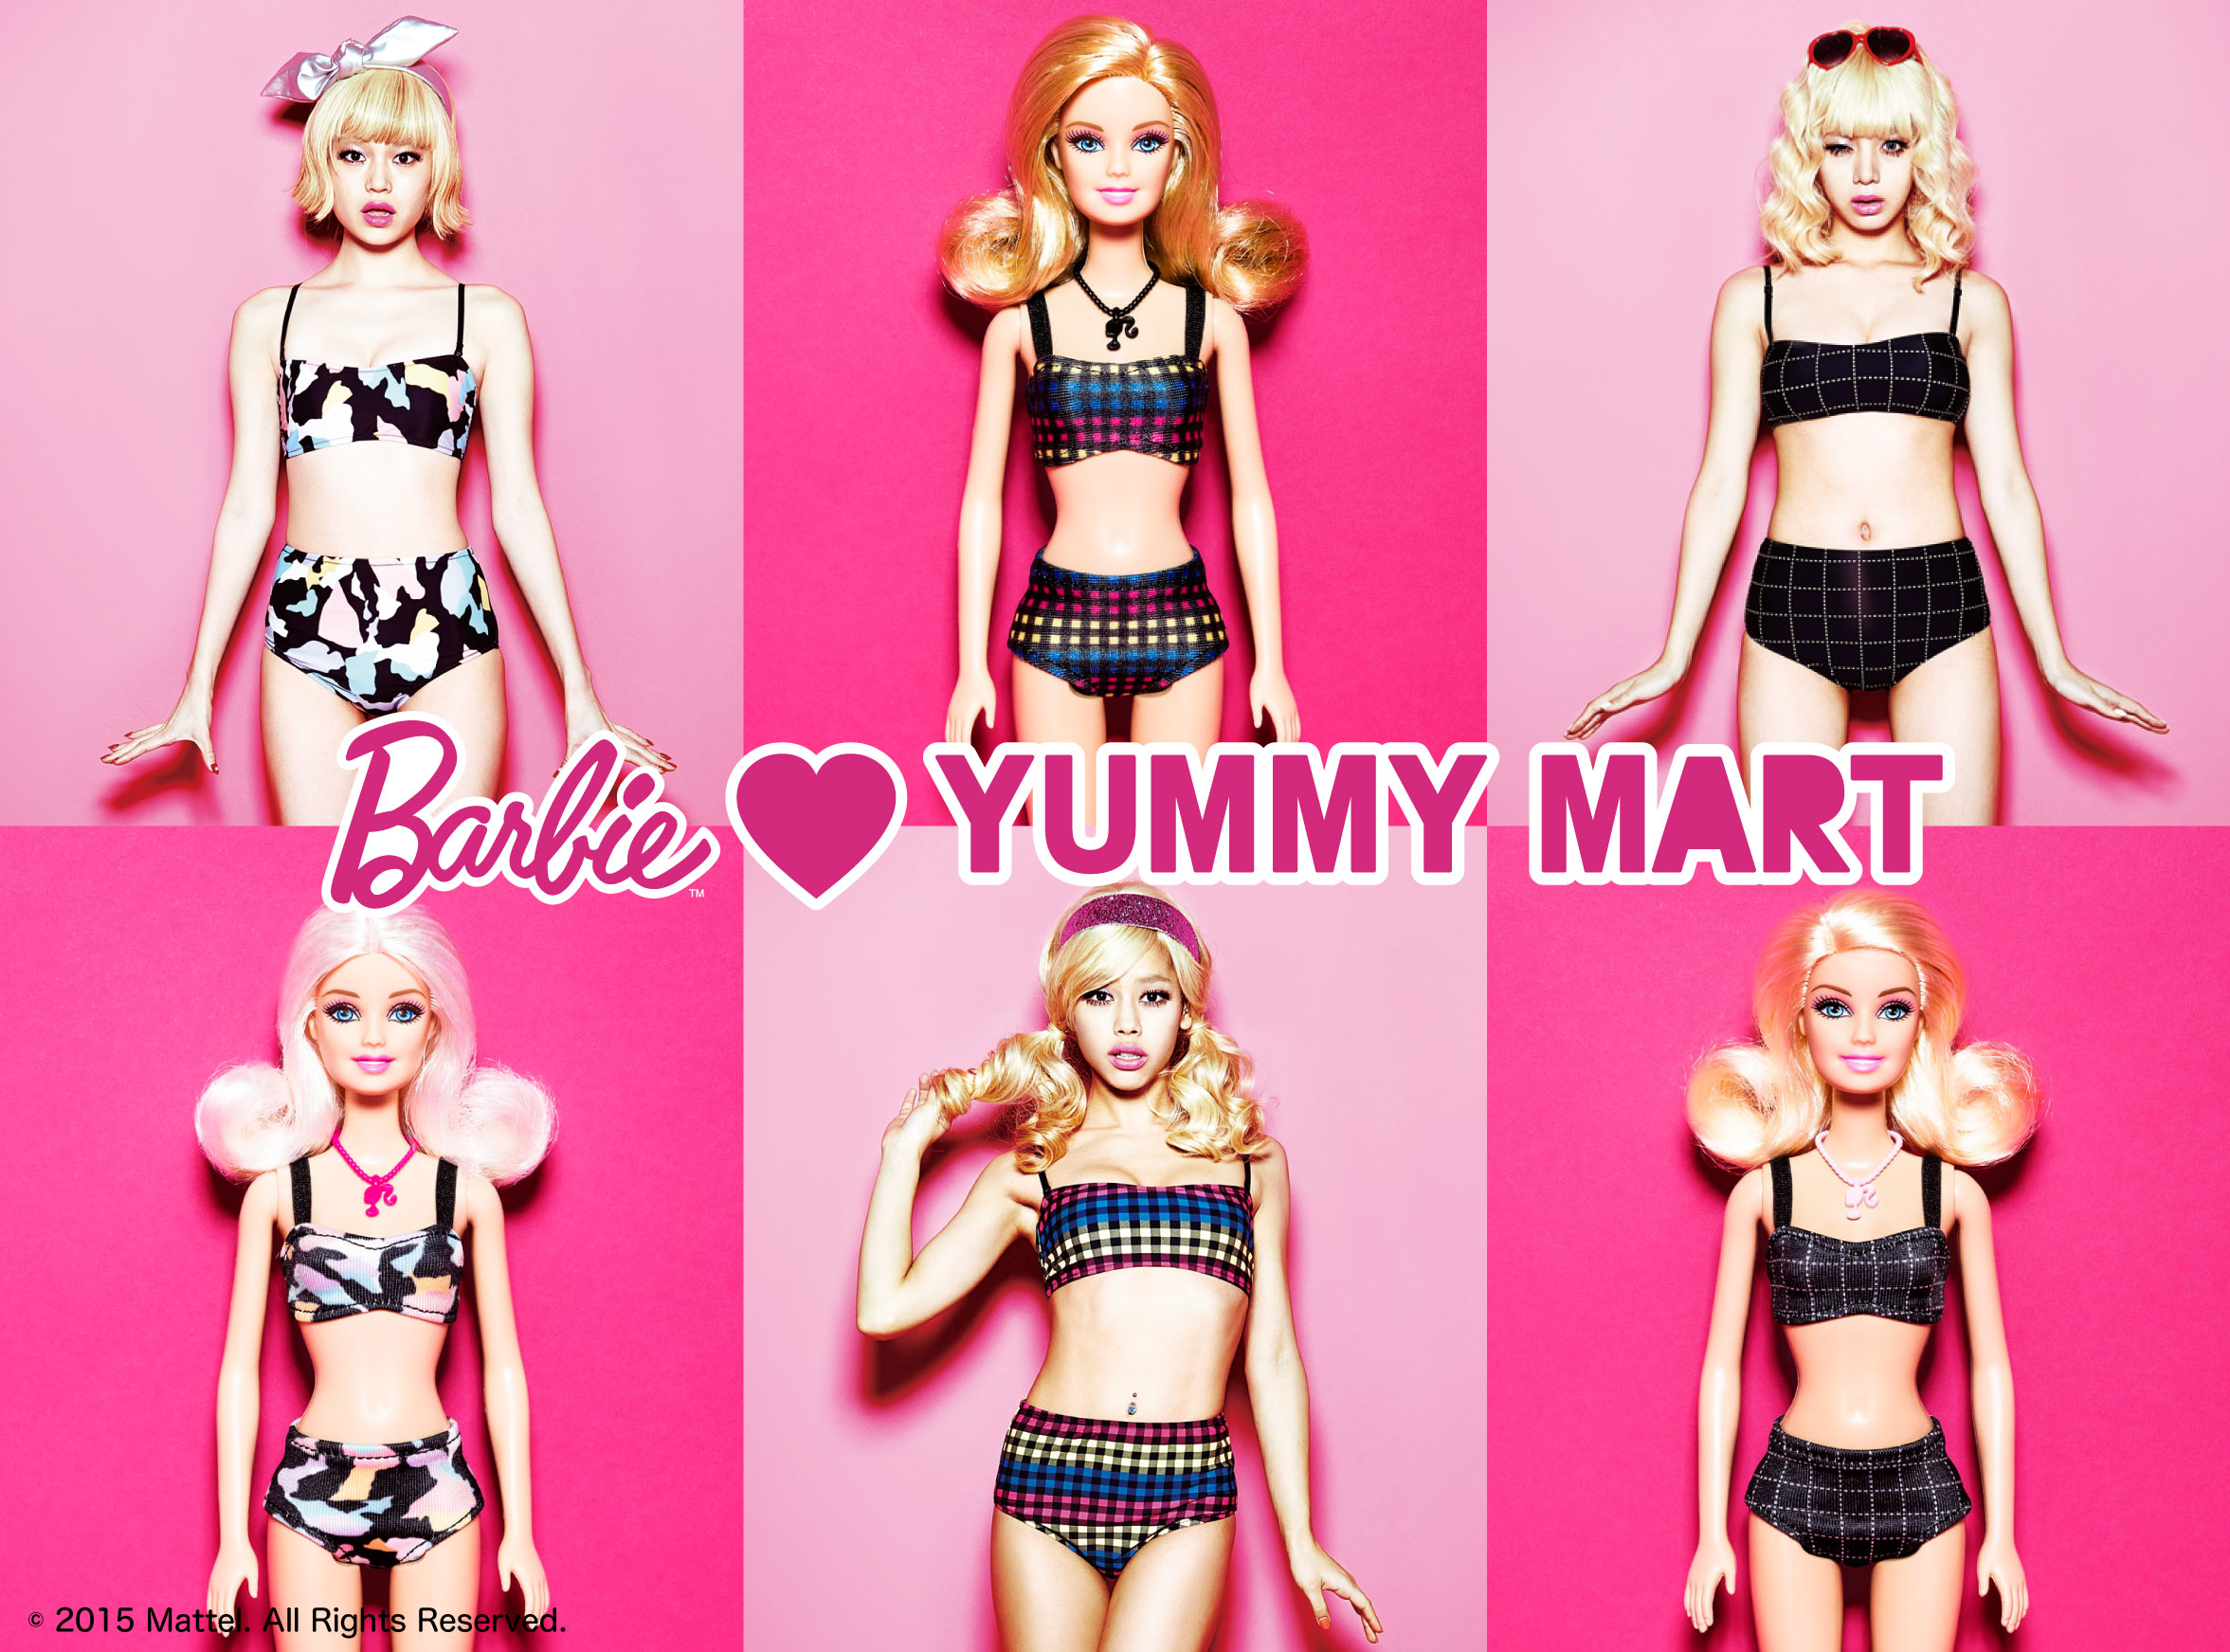 Barbie Yummy Mart Yummy Mart と バービー がコラボ 15年2月7日 土 ラフォーレ原宿店にて数量限定発売 株式会社ピーチ ジョンのプレスリリース